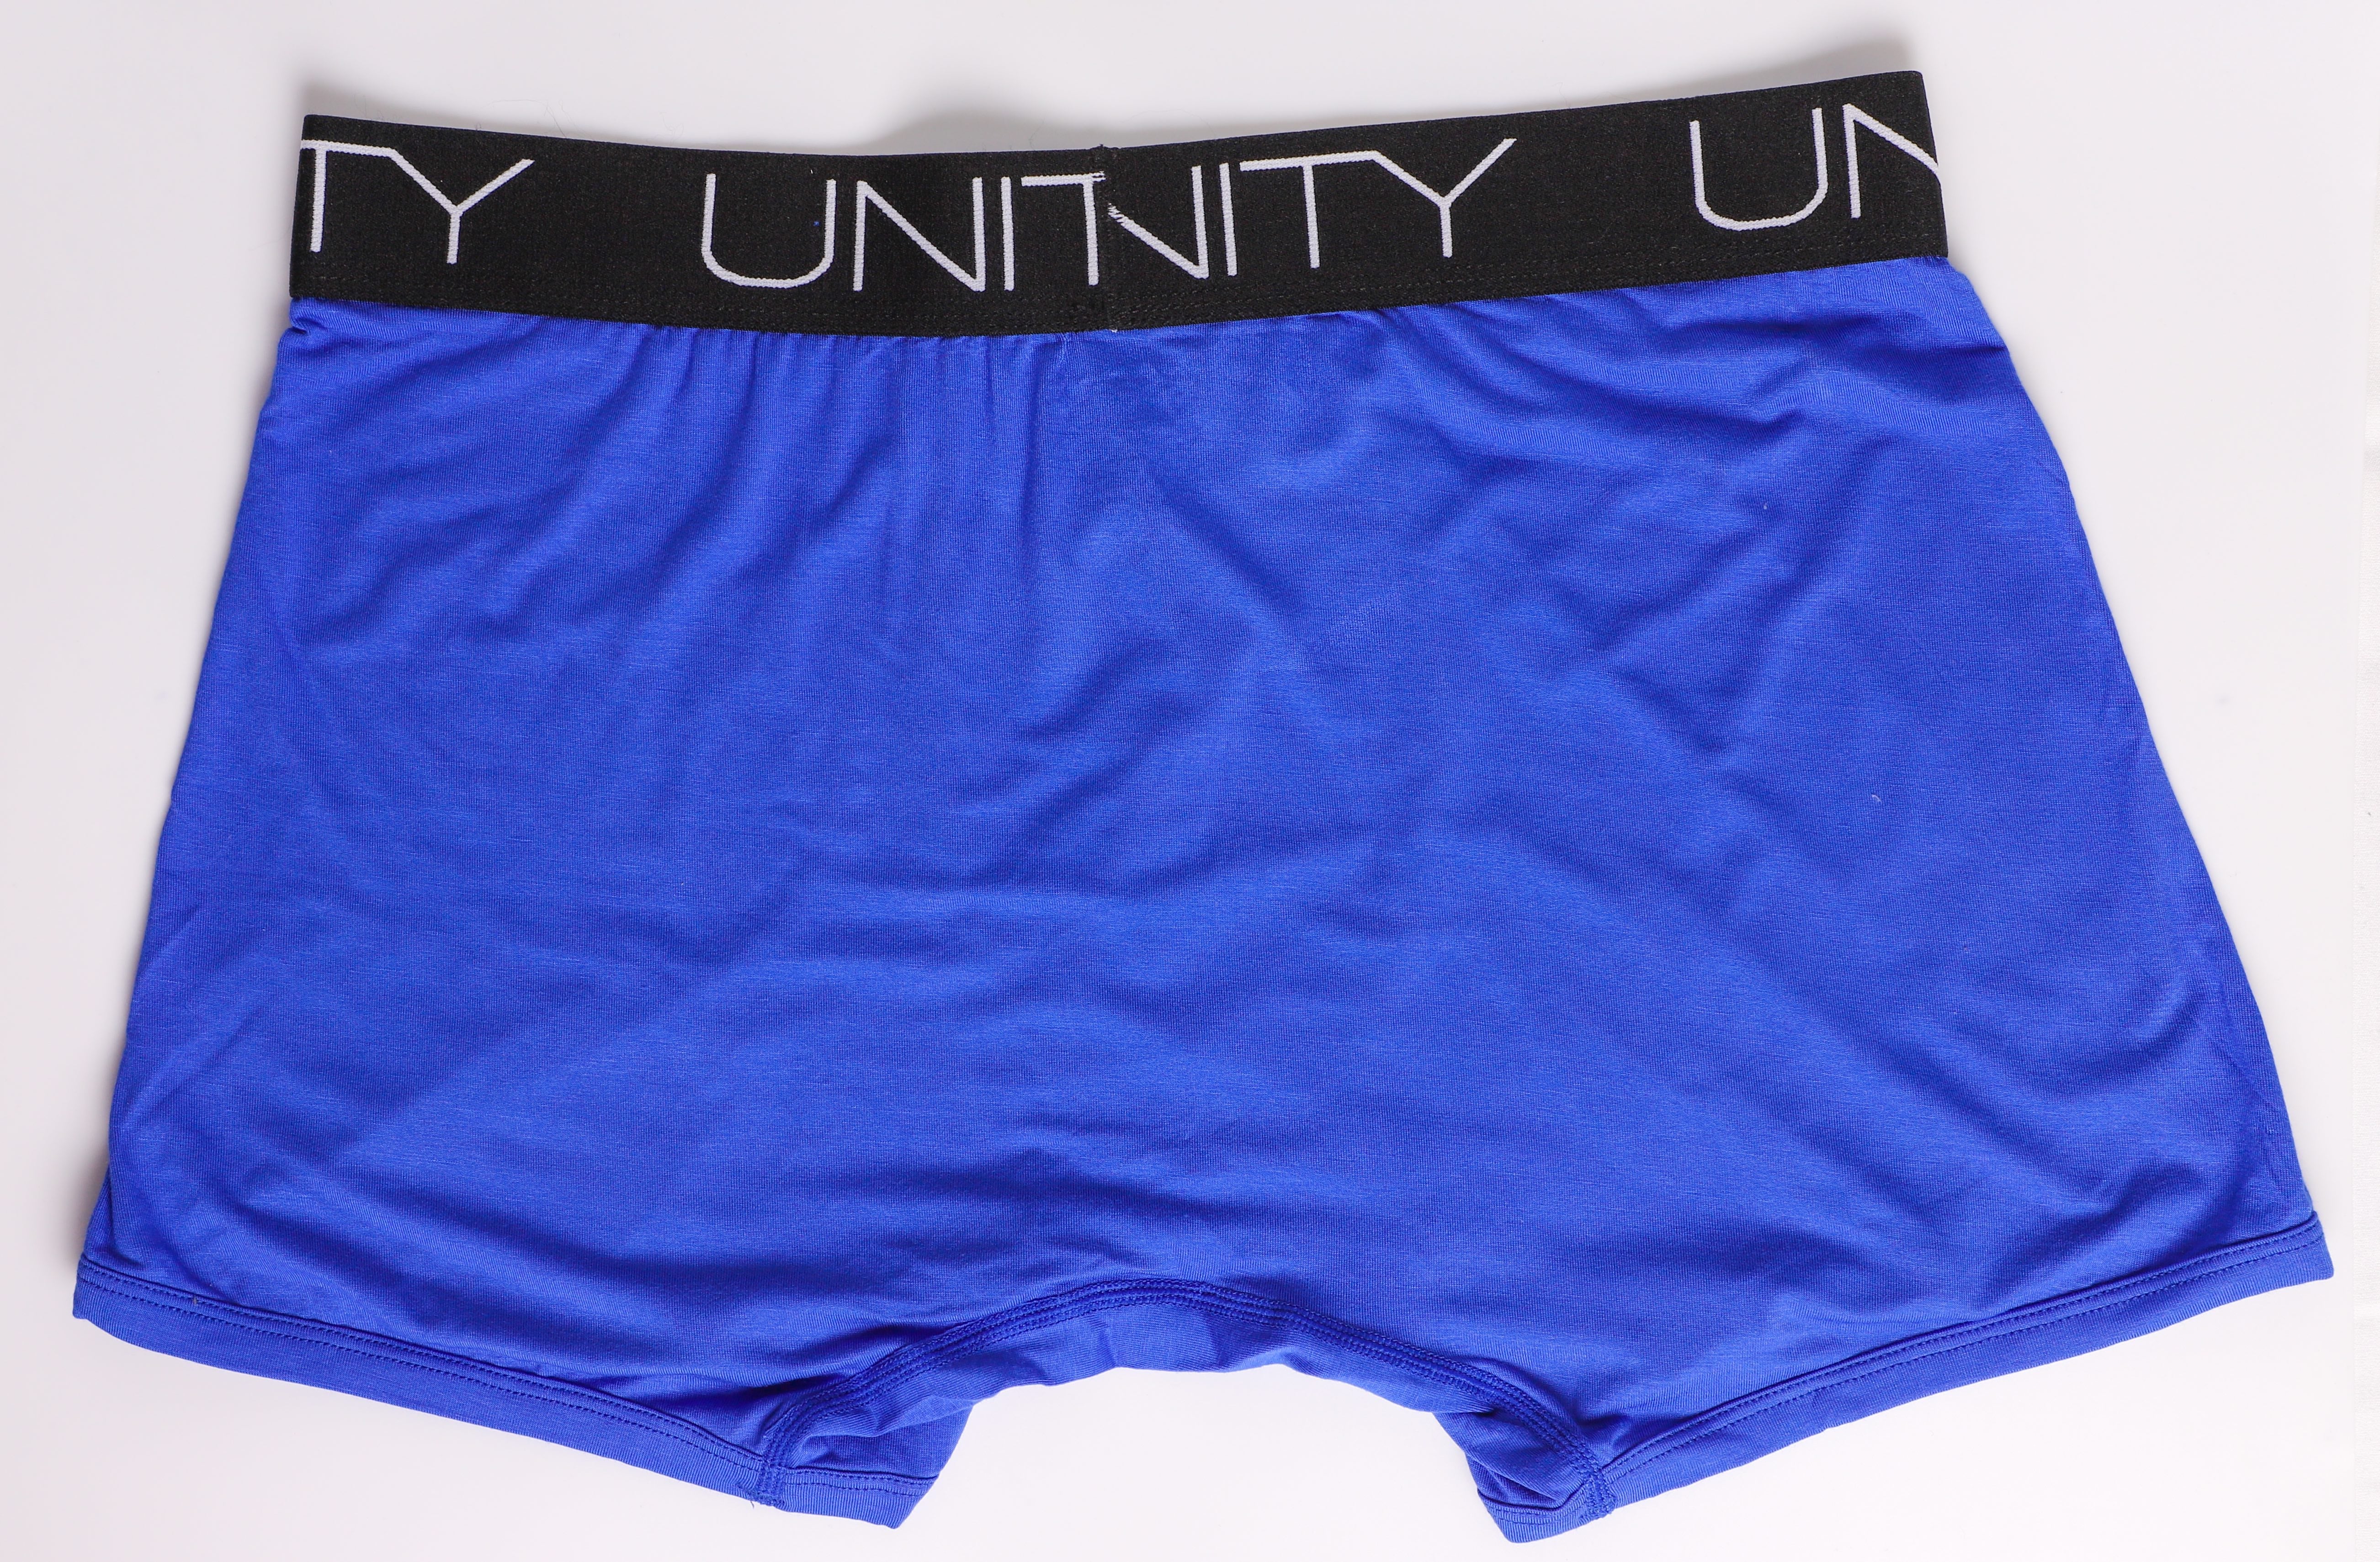 most comfortable underwear for men, men's bamboo underwear, eco-friendly underwear, men's underwear, blue underwear for men